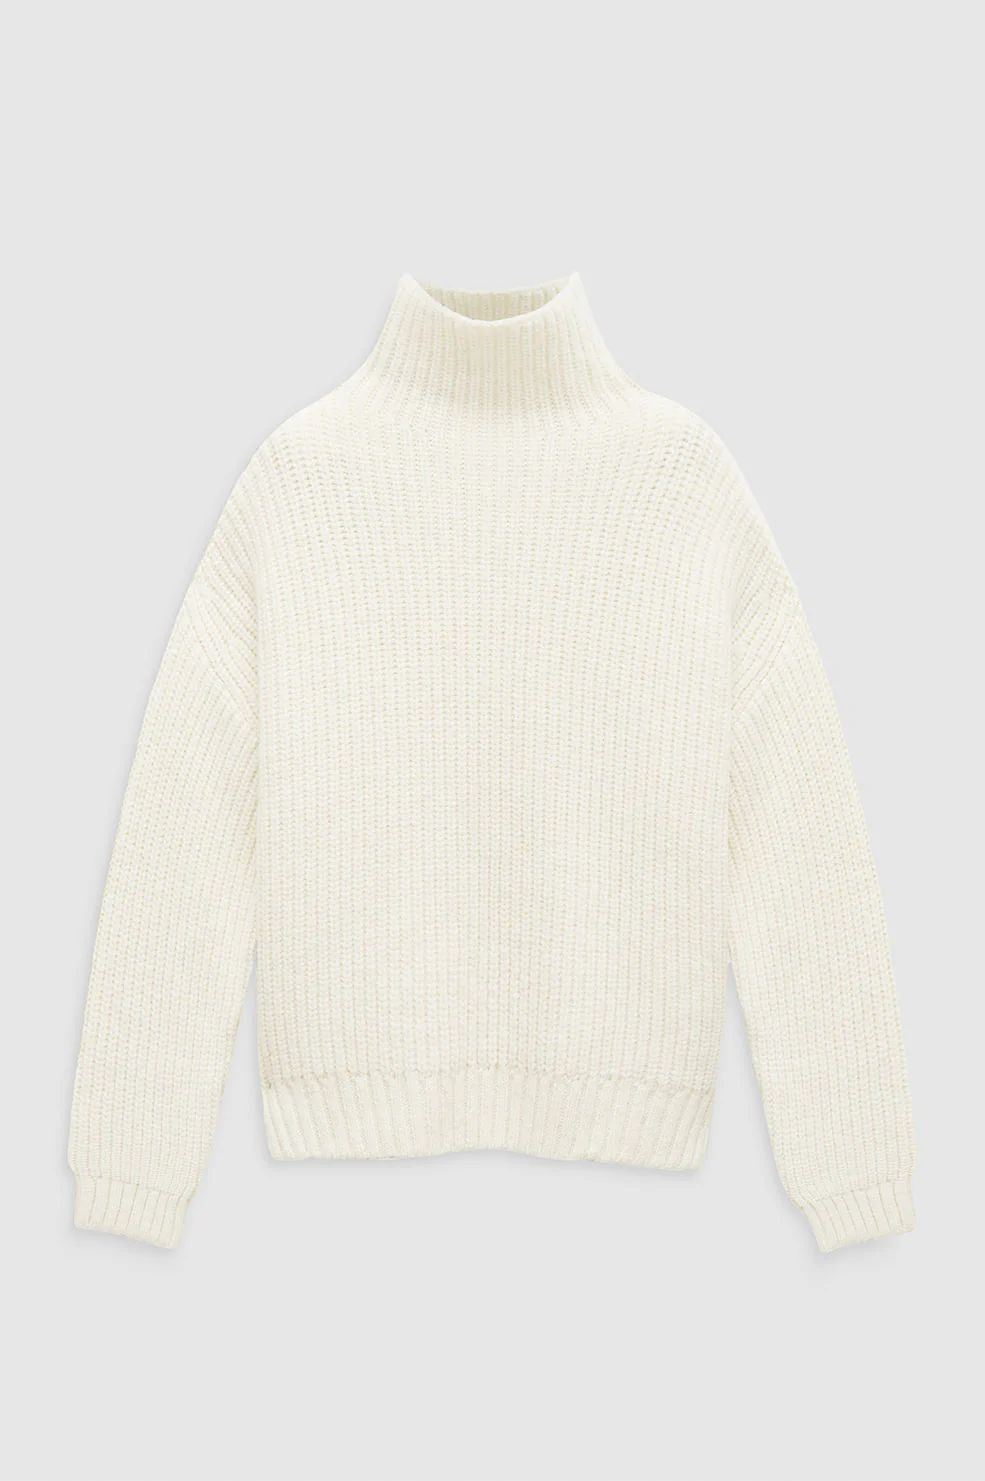 Sydney Sweater | Anine Bing